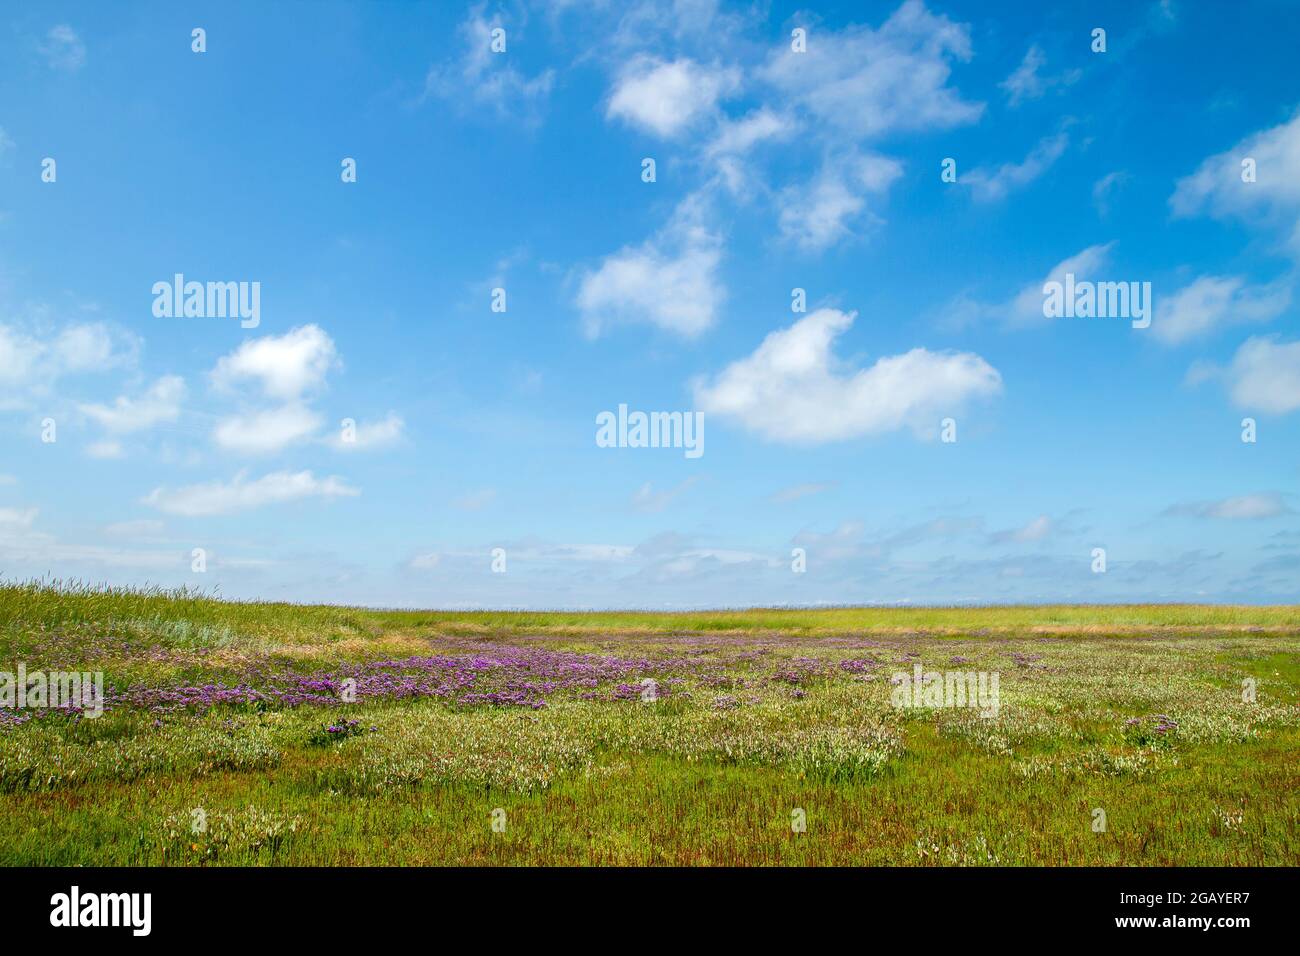 Paisaje primaveral con flores de color púrpura lavanda floreciendo en un pantano de la reserva natural De Slufter, Nationaal Park Duinen van Texel en el isl Foto de stock